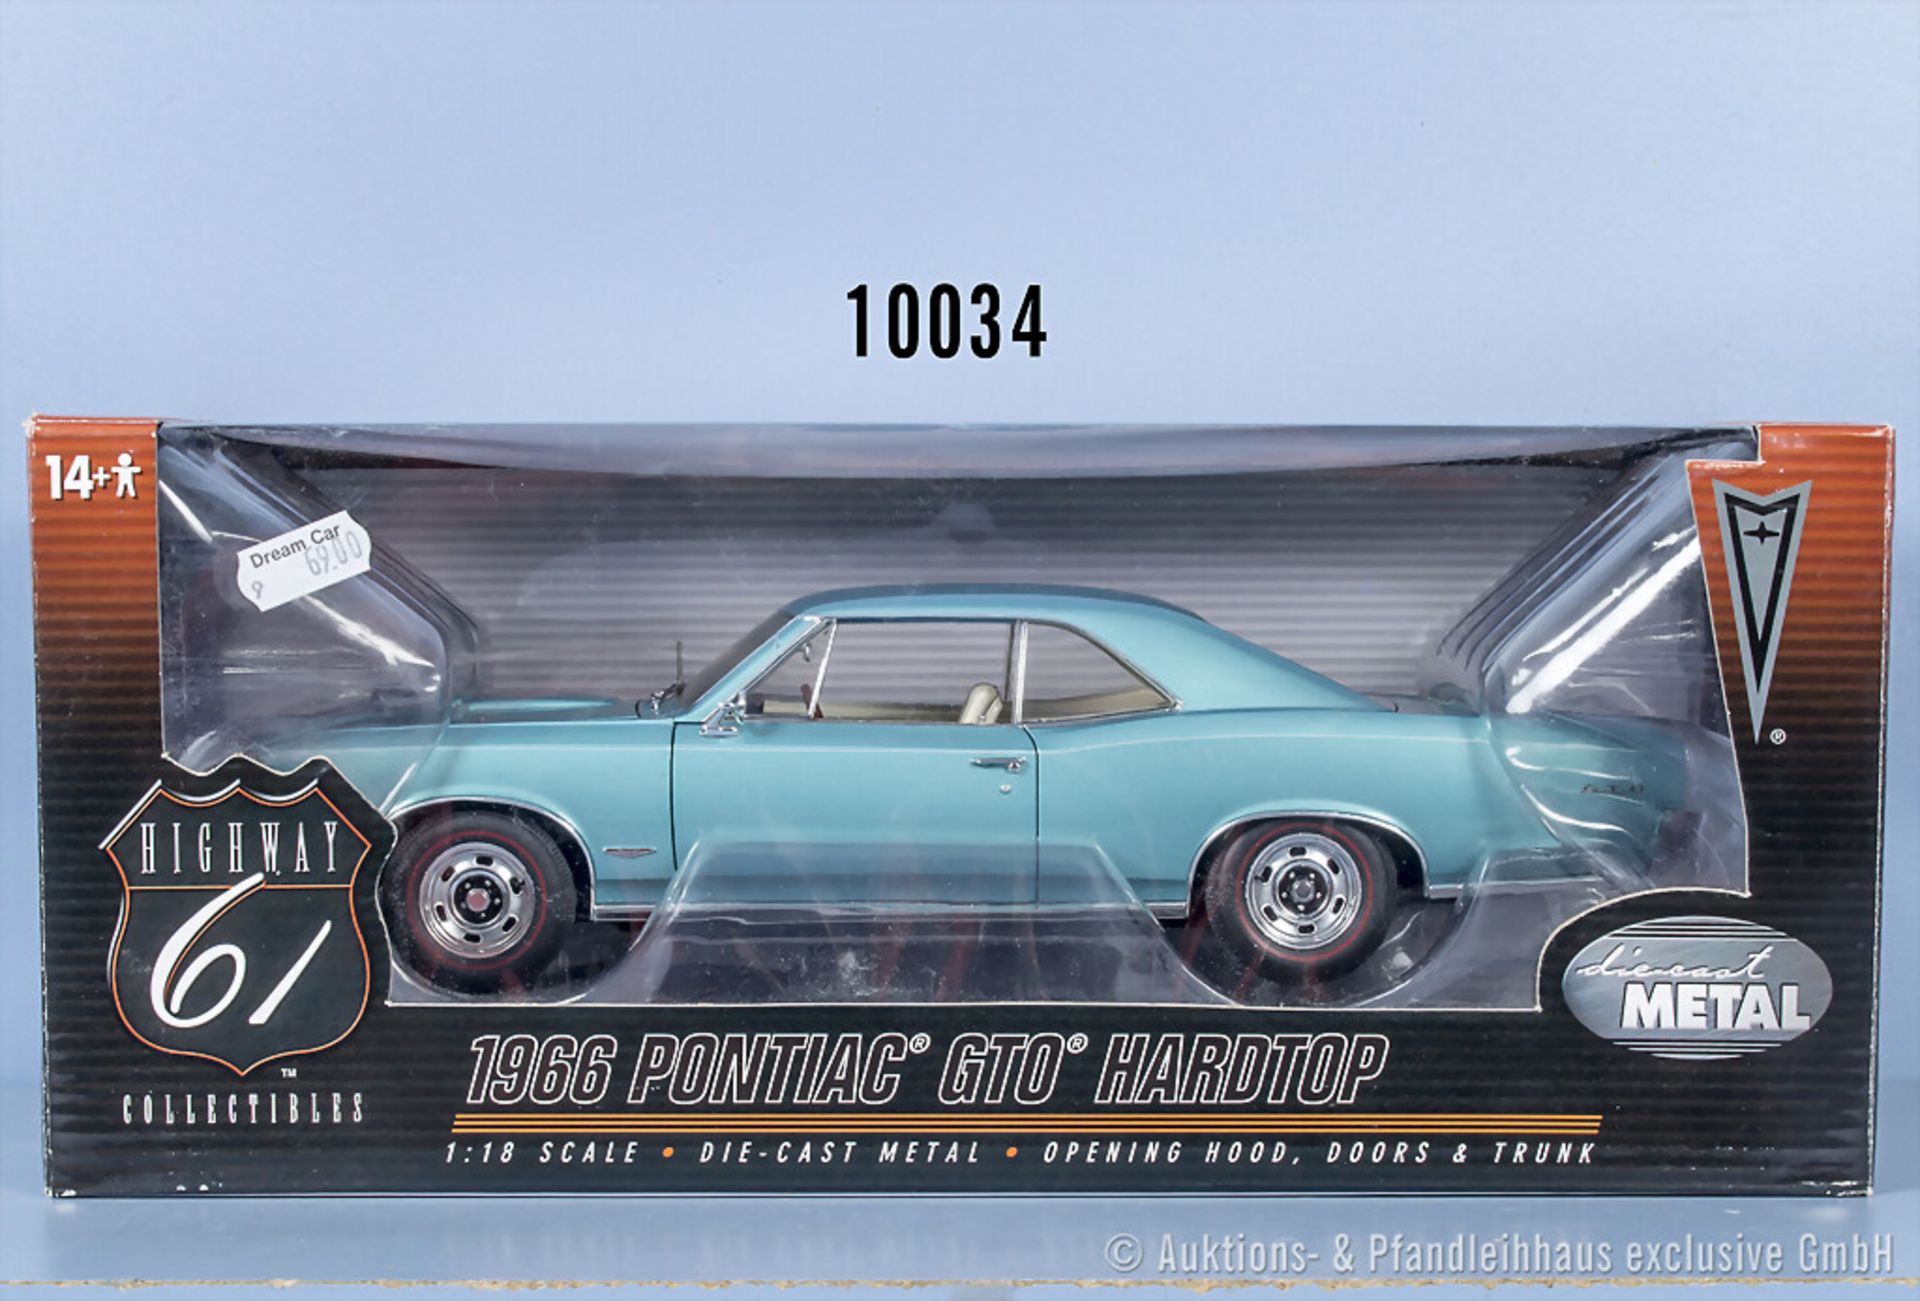 Highway 61 1966 Pontiac GTO Hardtop, 50584, Metall, 1:18, Z 0, ...